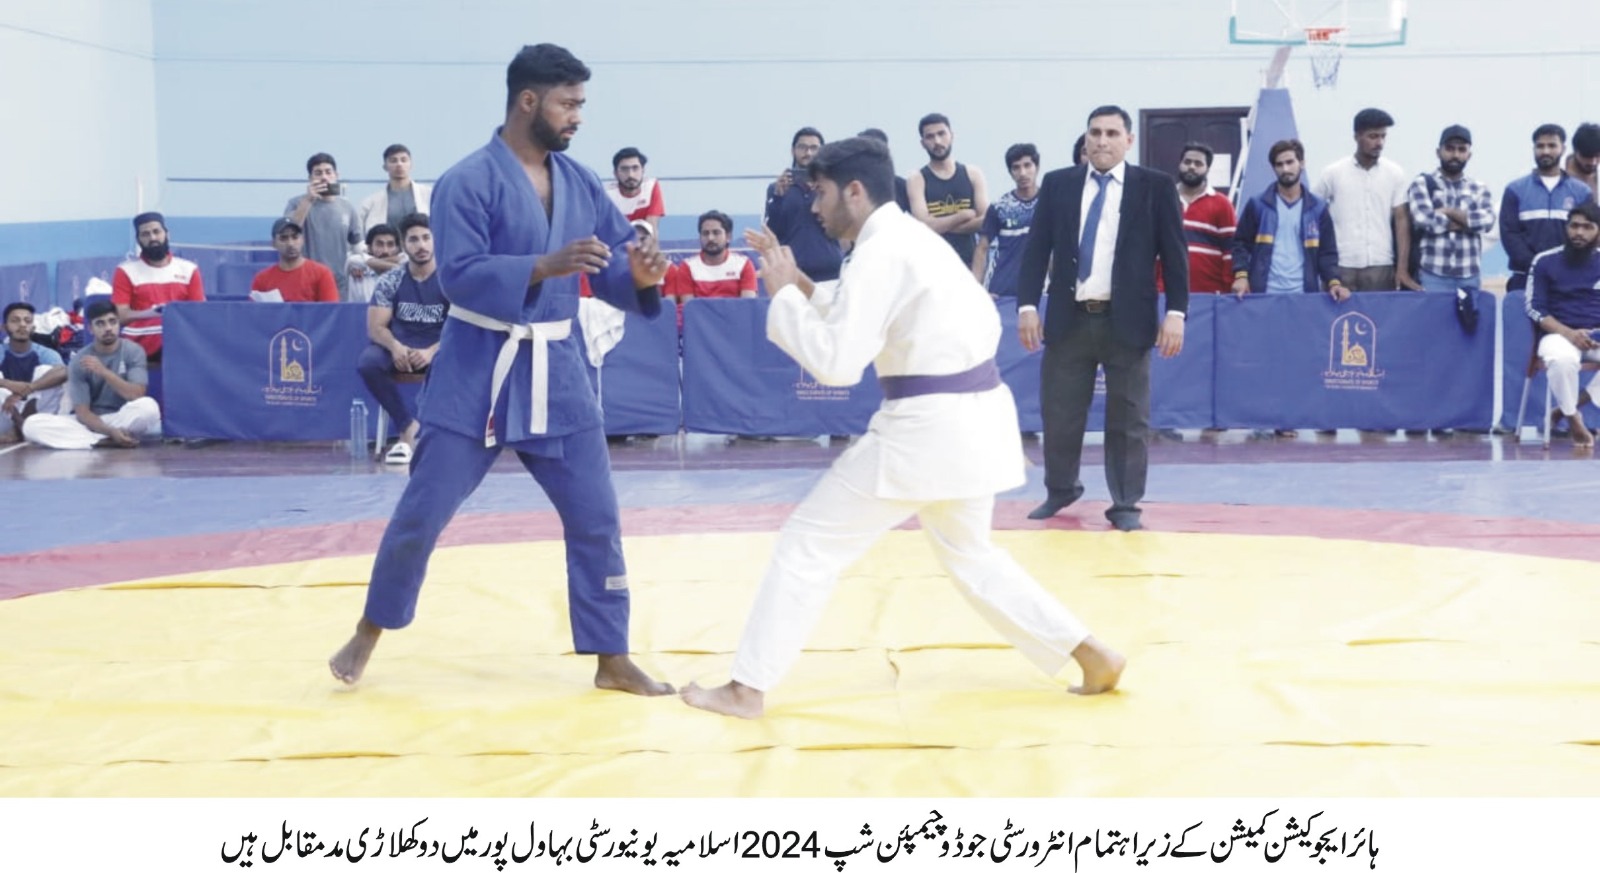 HEC Judo championship 2024 urdu